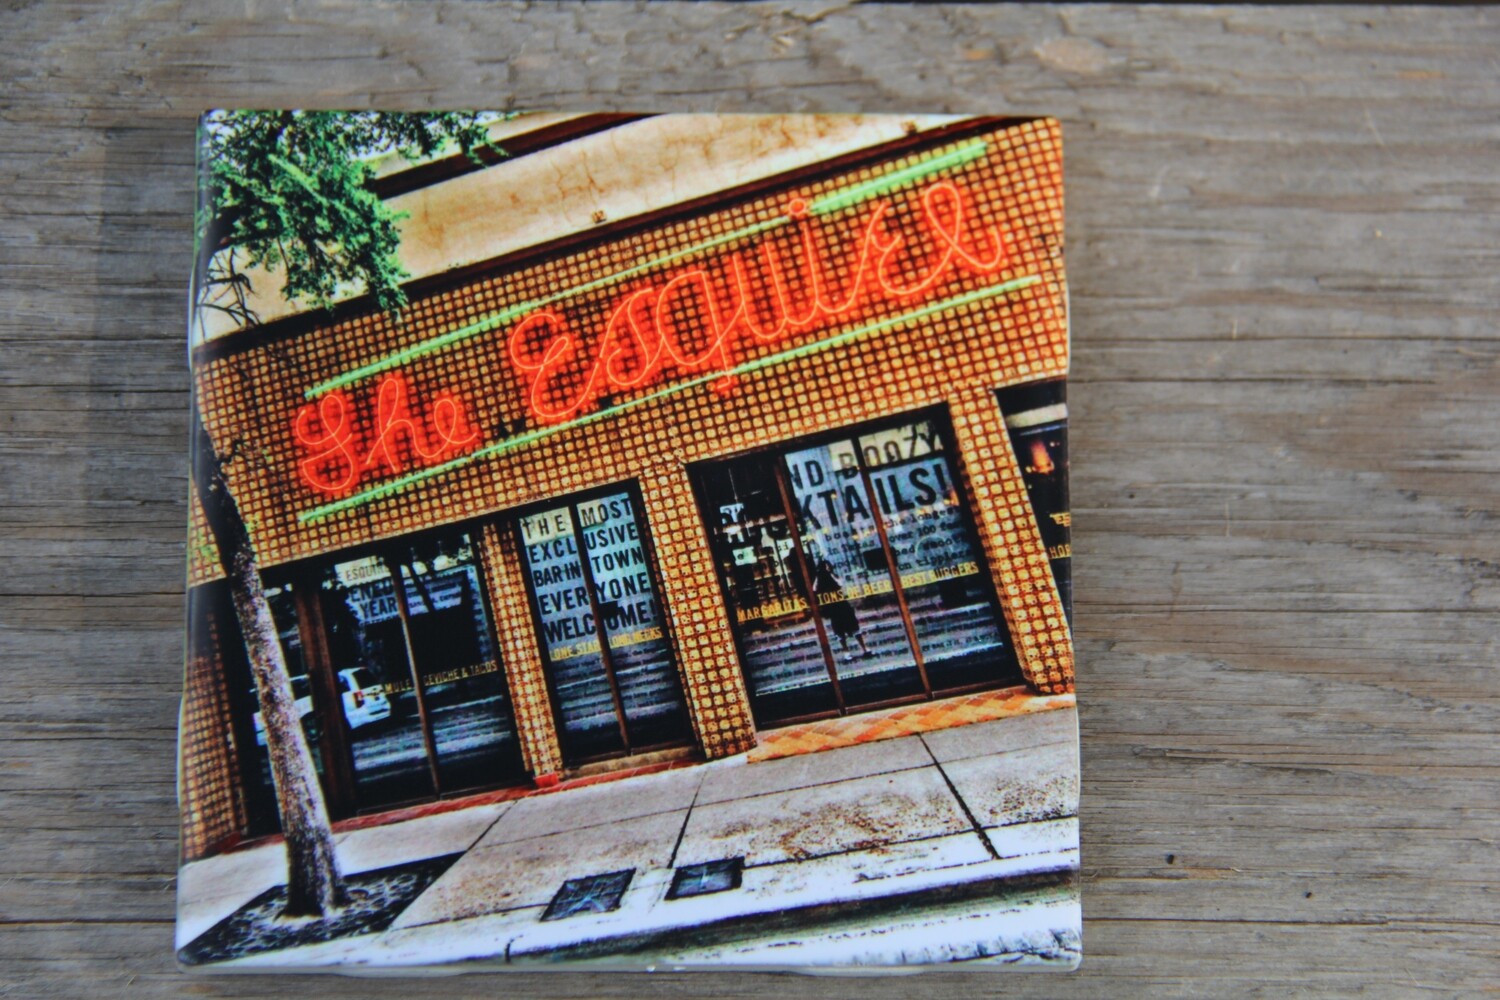 South Austin Gallery Coaster Esquire Tavern